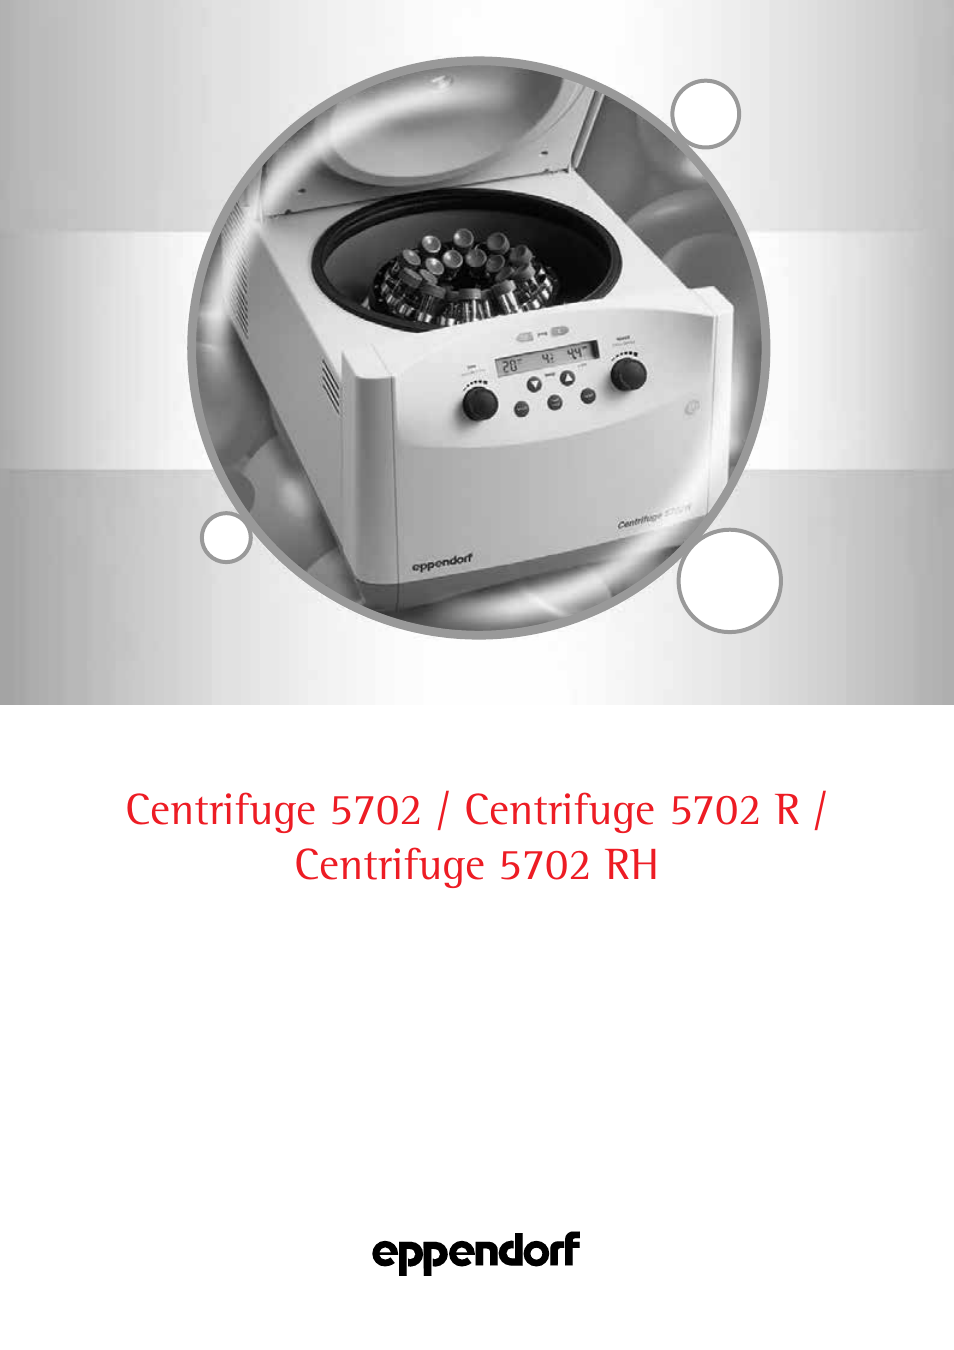 Eppendorf 5702 RH Centrifuge User Manual | 27 pages | Also for: 5702 R  Centrifuge, 5702 Centrifuge